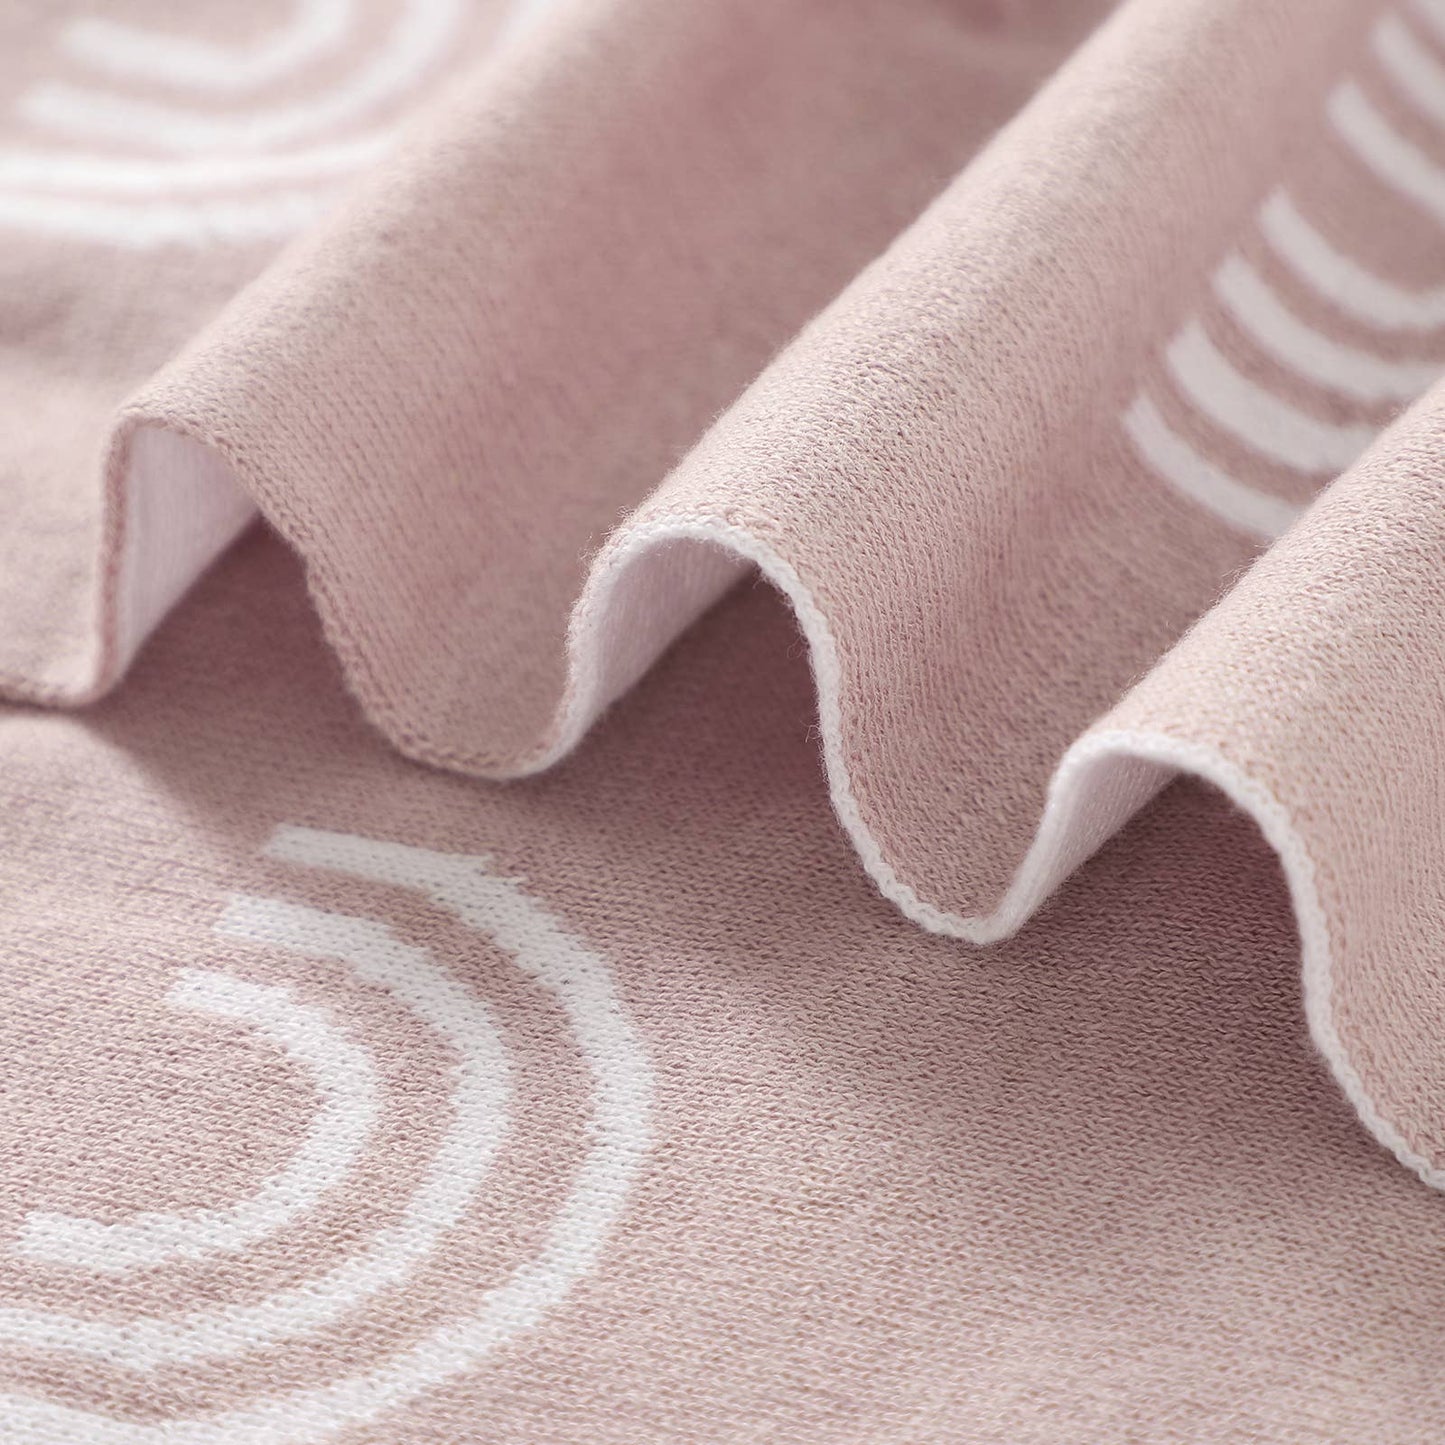 Bleu La La - 100% Luxury Cotton Swaddle Receiving Baby Blanket - Rainbow: Grey